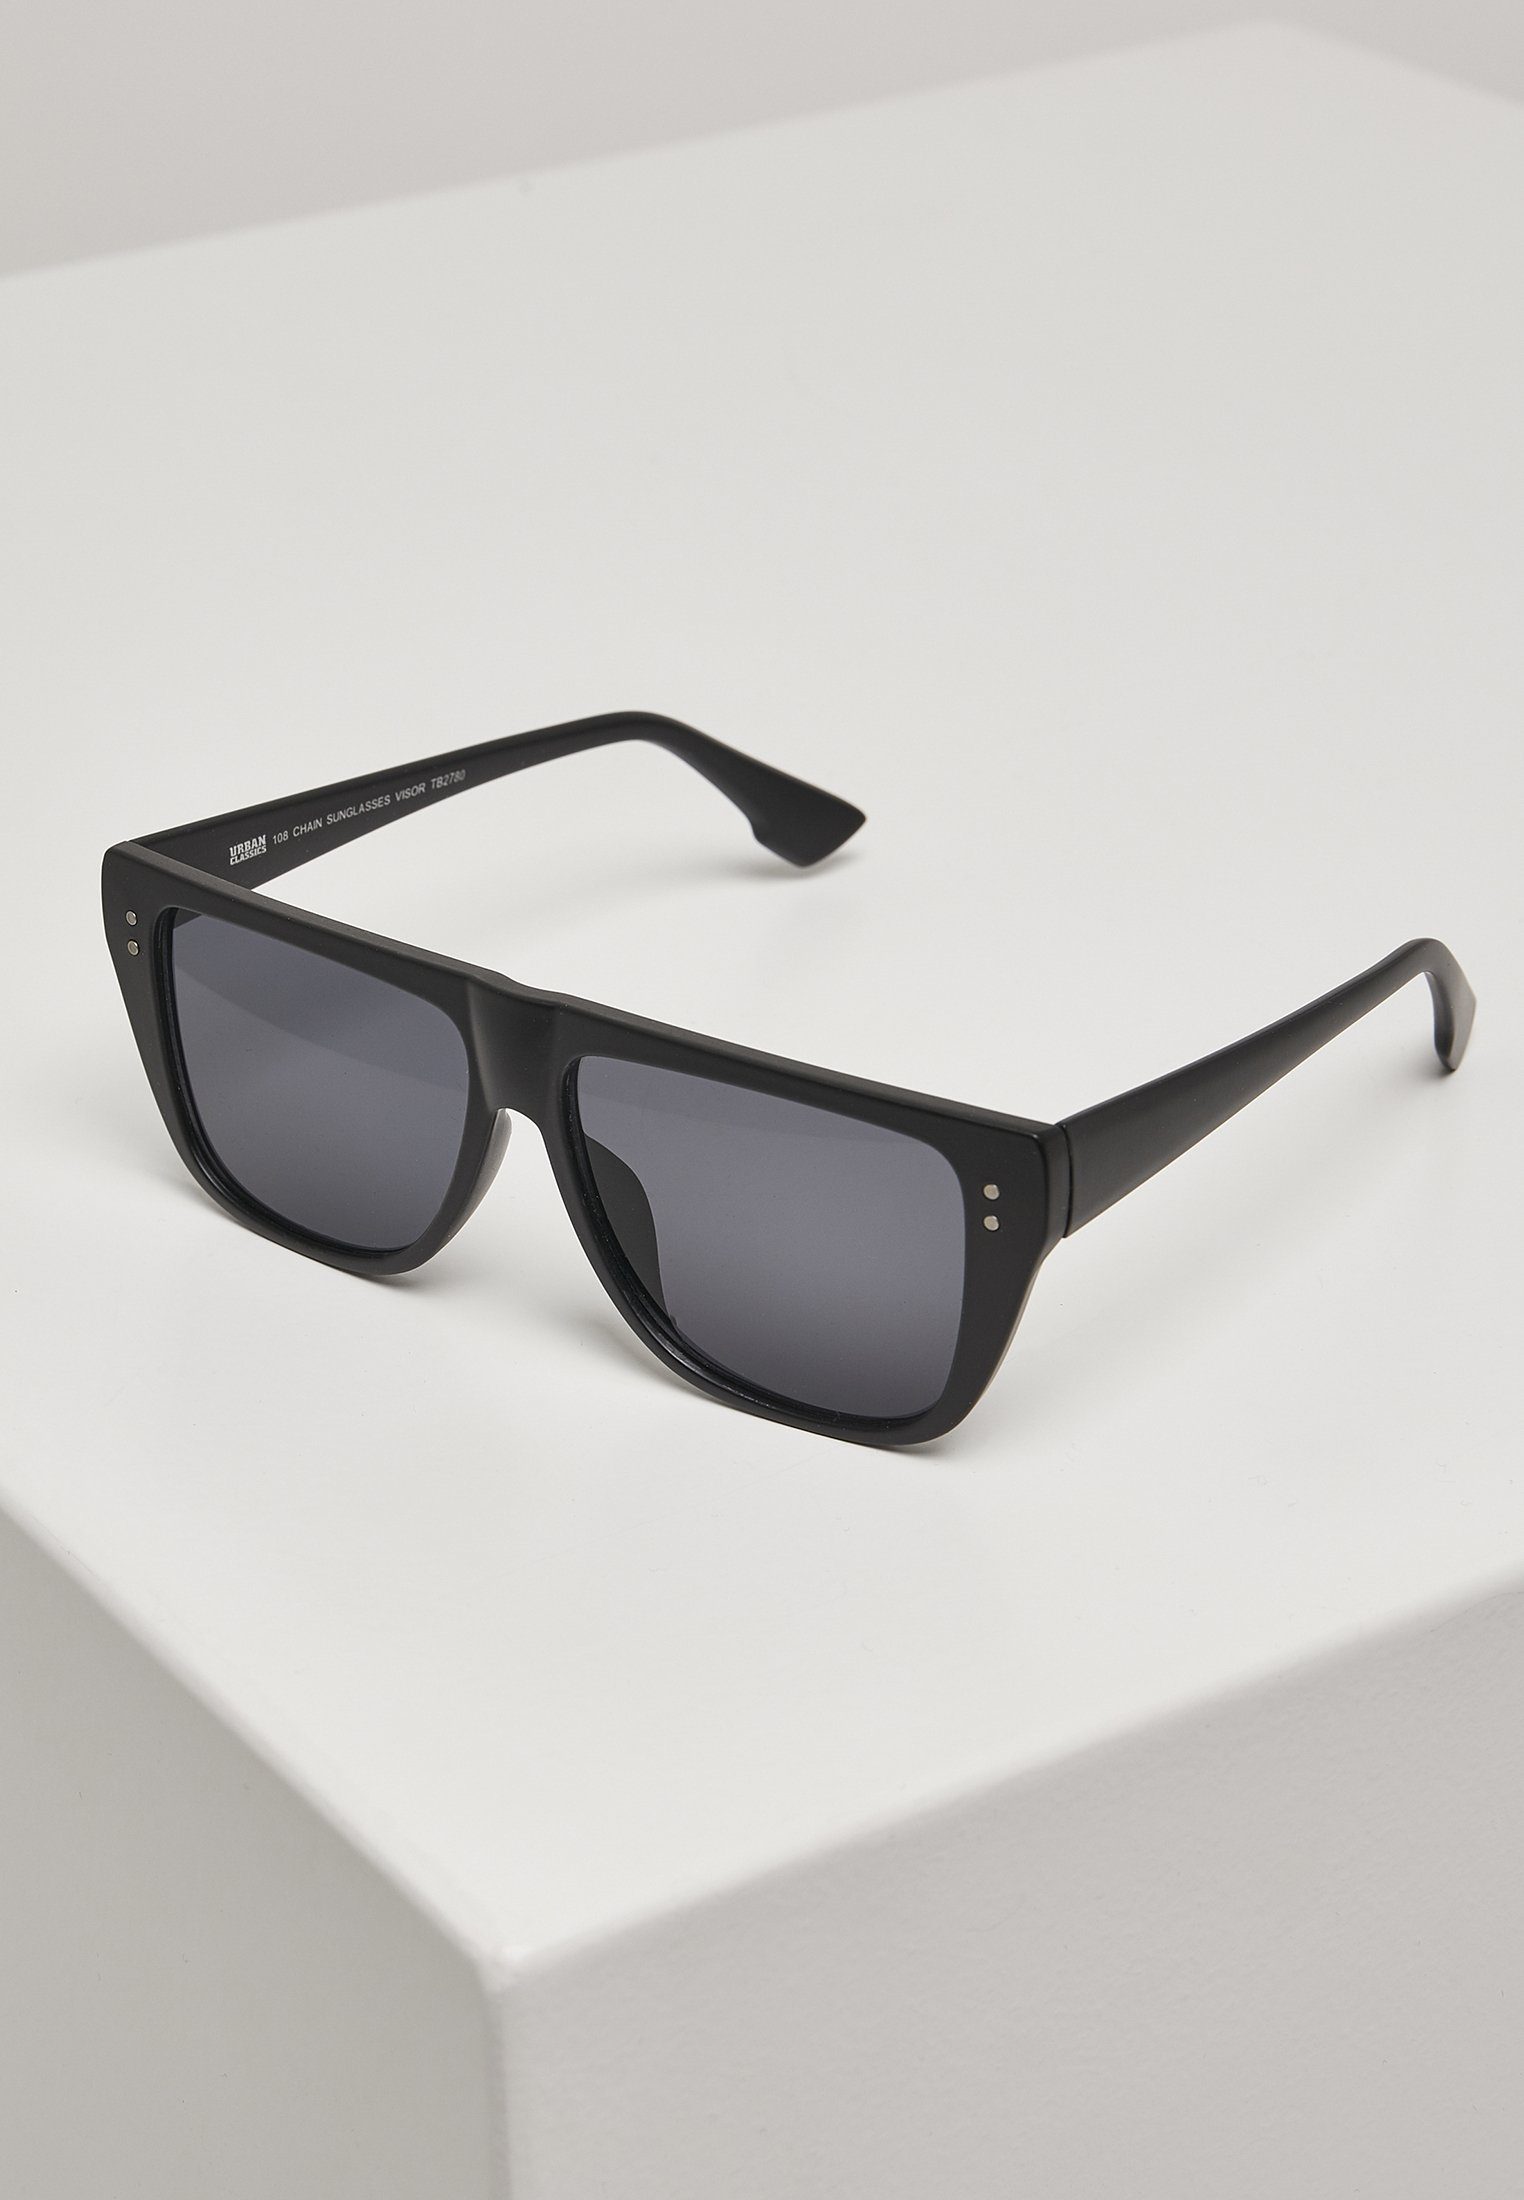 Sunglasses Sonnenbrille 108 Chain CLASSICS Visor URBAN Accessoires